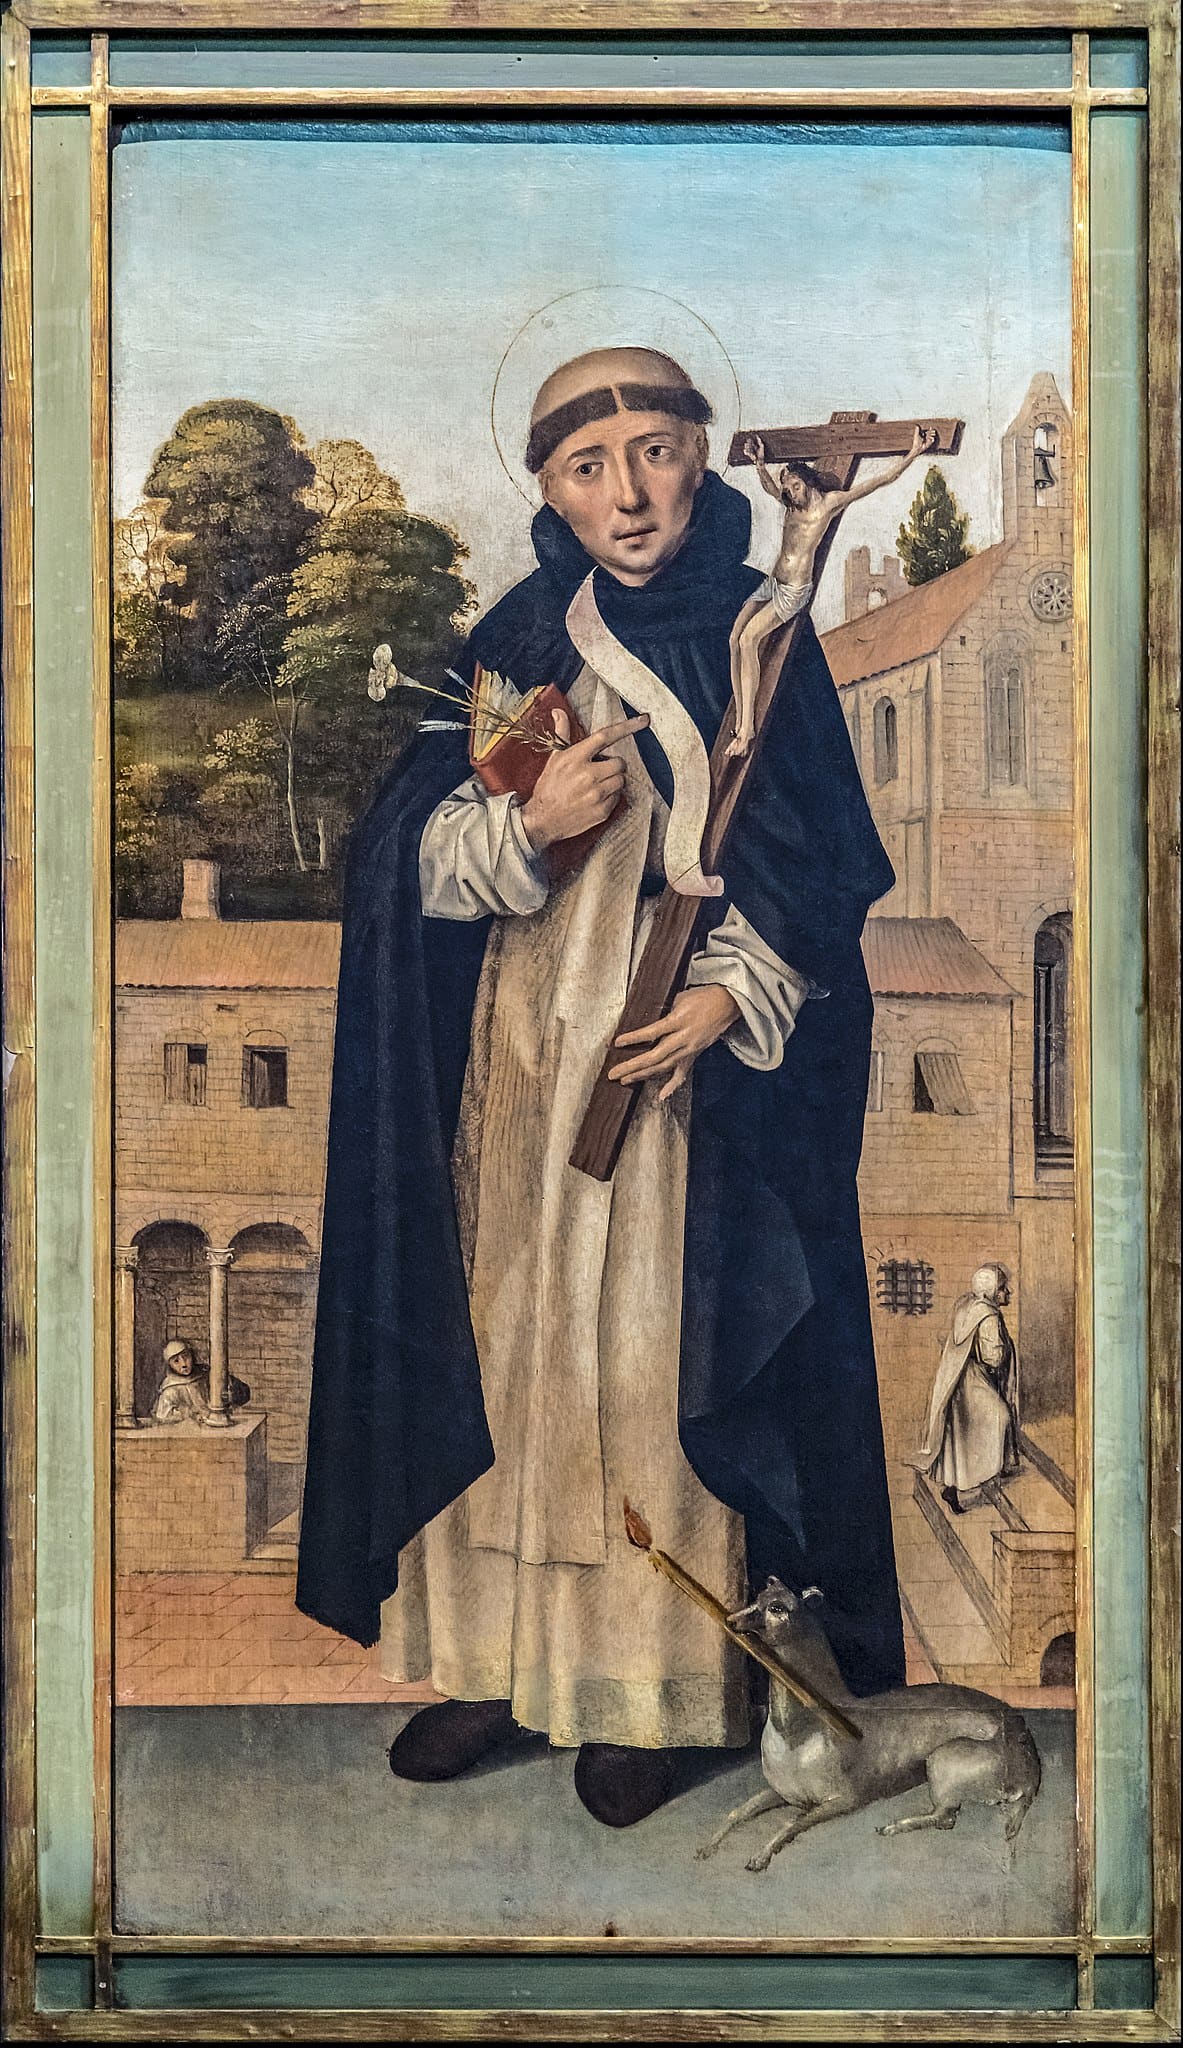 Portret sv. Dominika, s raspelom i psom s bakljom − referenca na lomaču inkvizicije